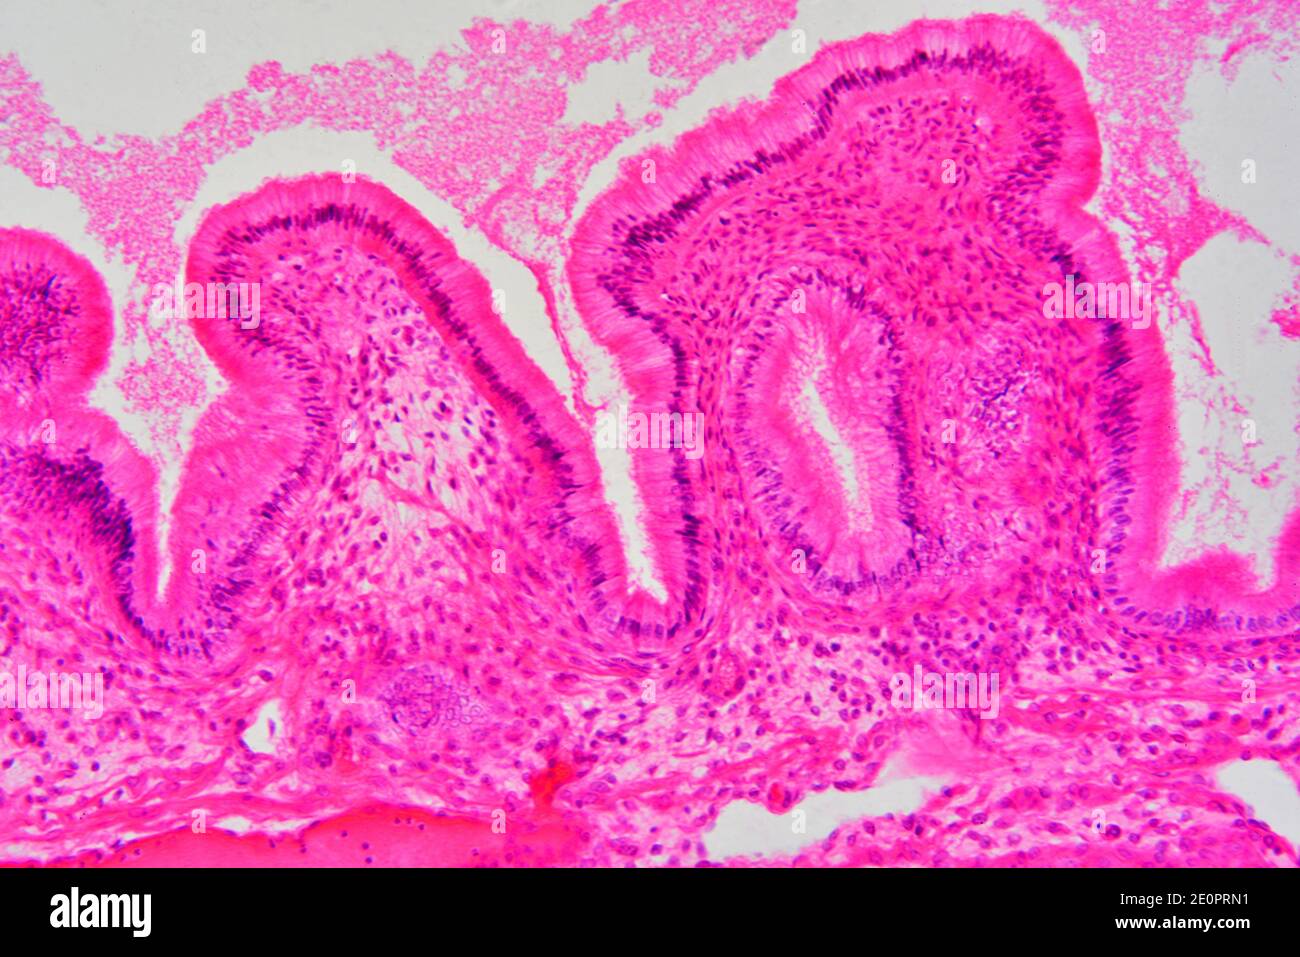 Gallbladder wall showing columnar epithelium with mucosal folds ...